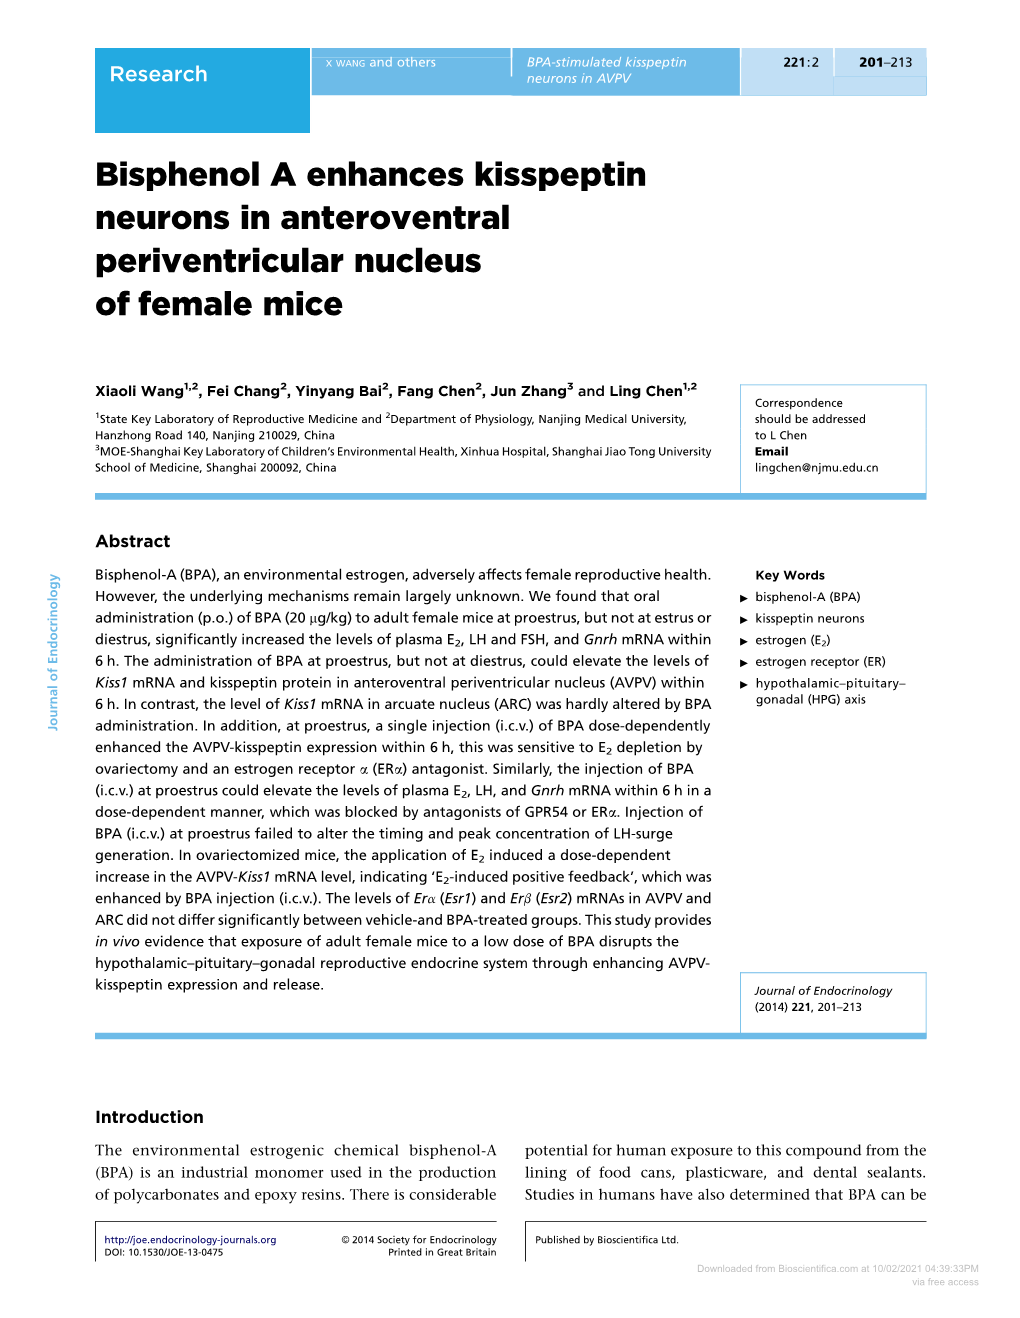 Bisphenol a Enhances Kisspeptin Neurons in Anteroventral Periventricular Nucleus of Female Mice